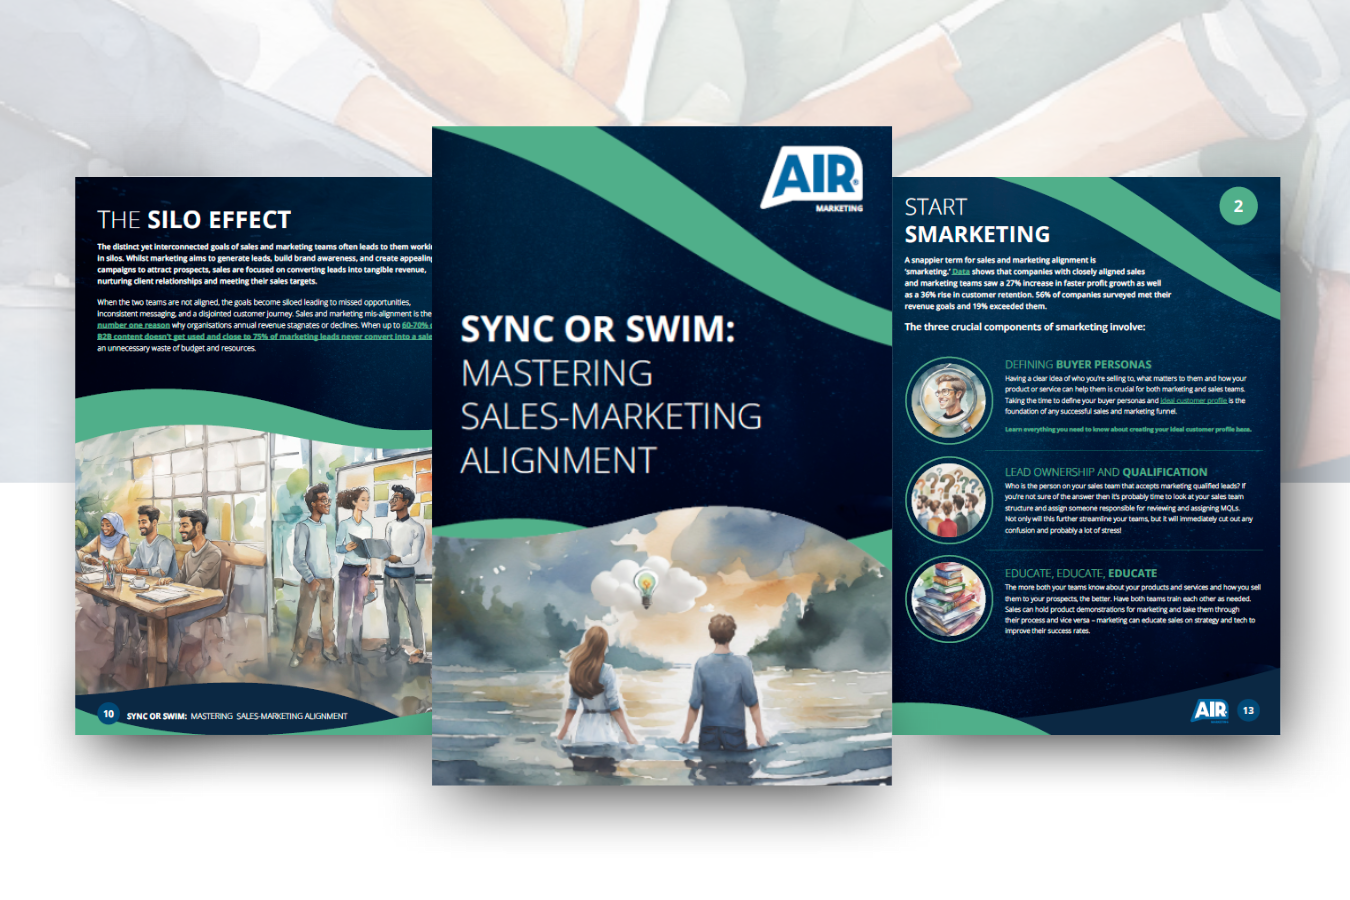 Sync or Swim: Mastering Sales-Marketing Alignment